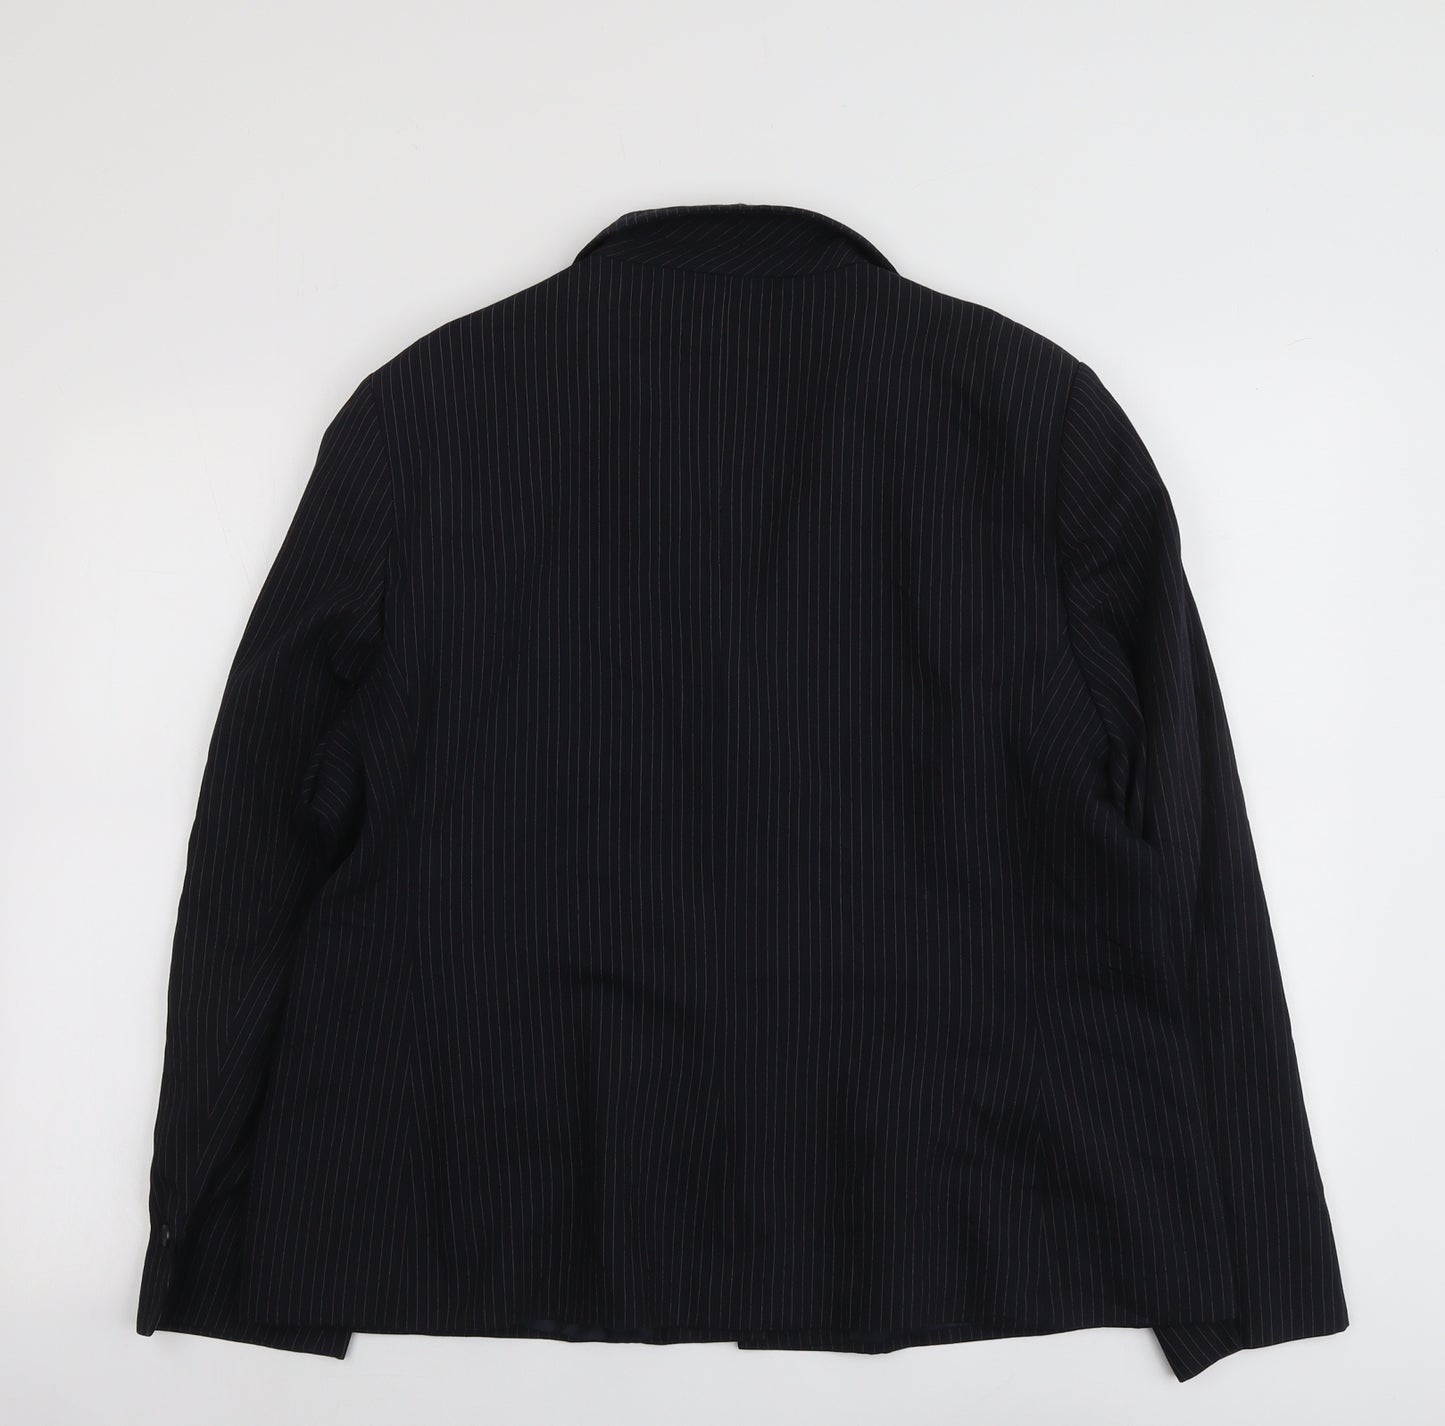 Klass Womens Black Pinstripe Polyester Jacket Suit Jacket Size 20